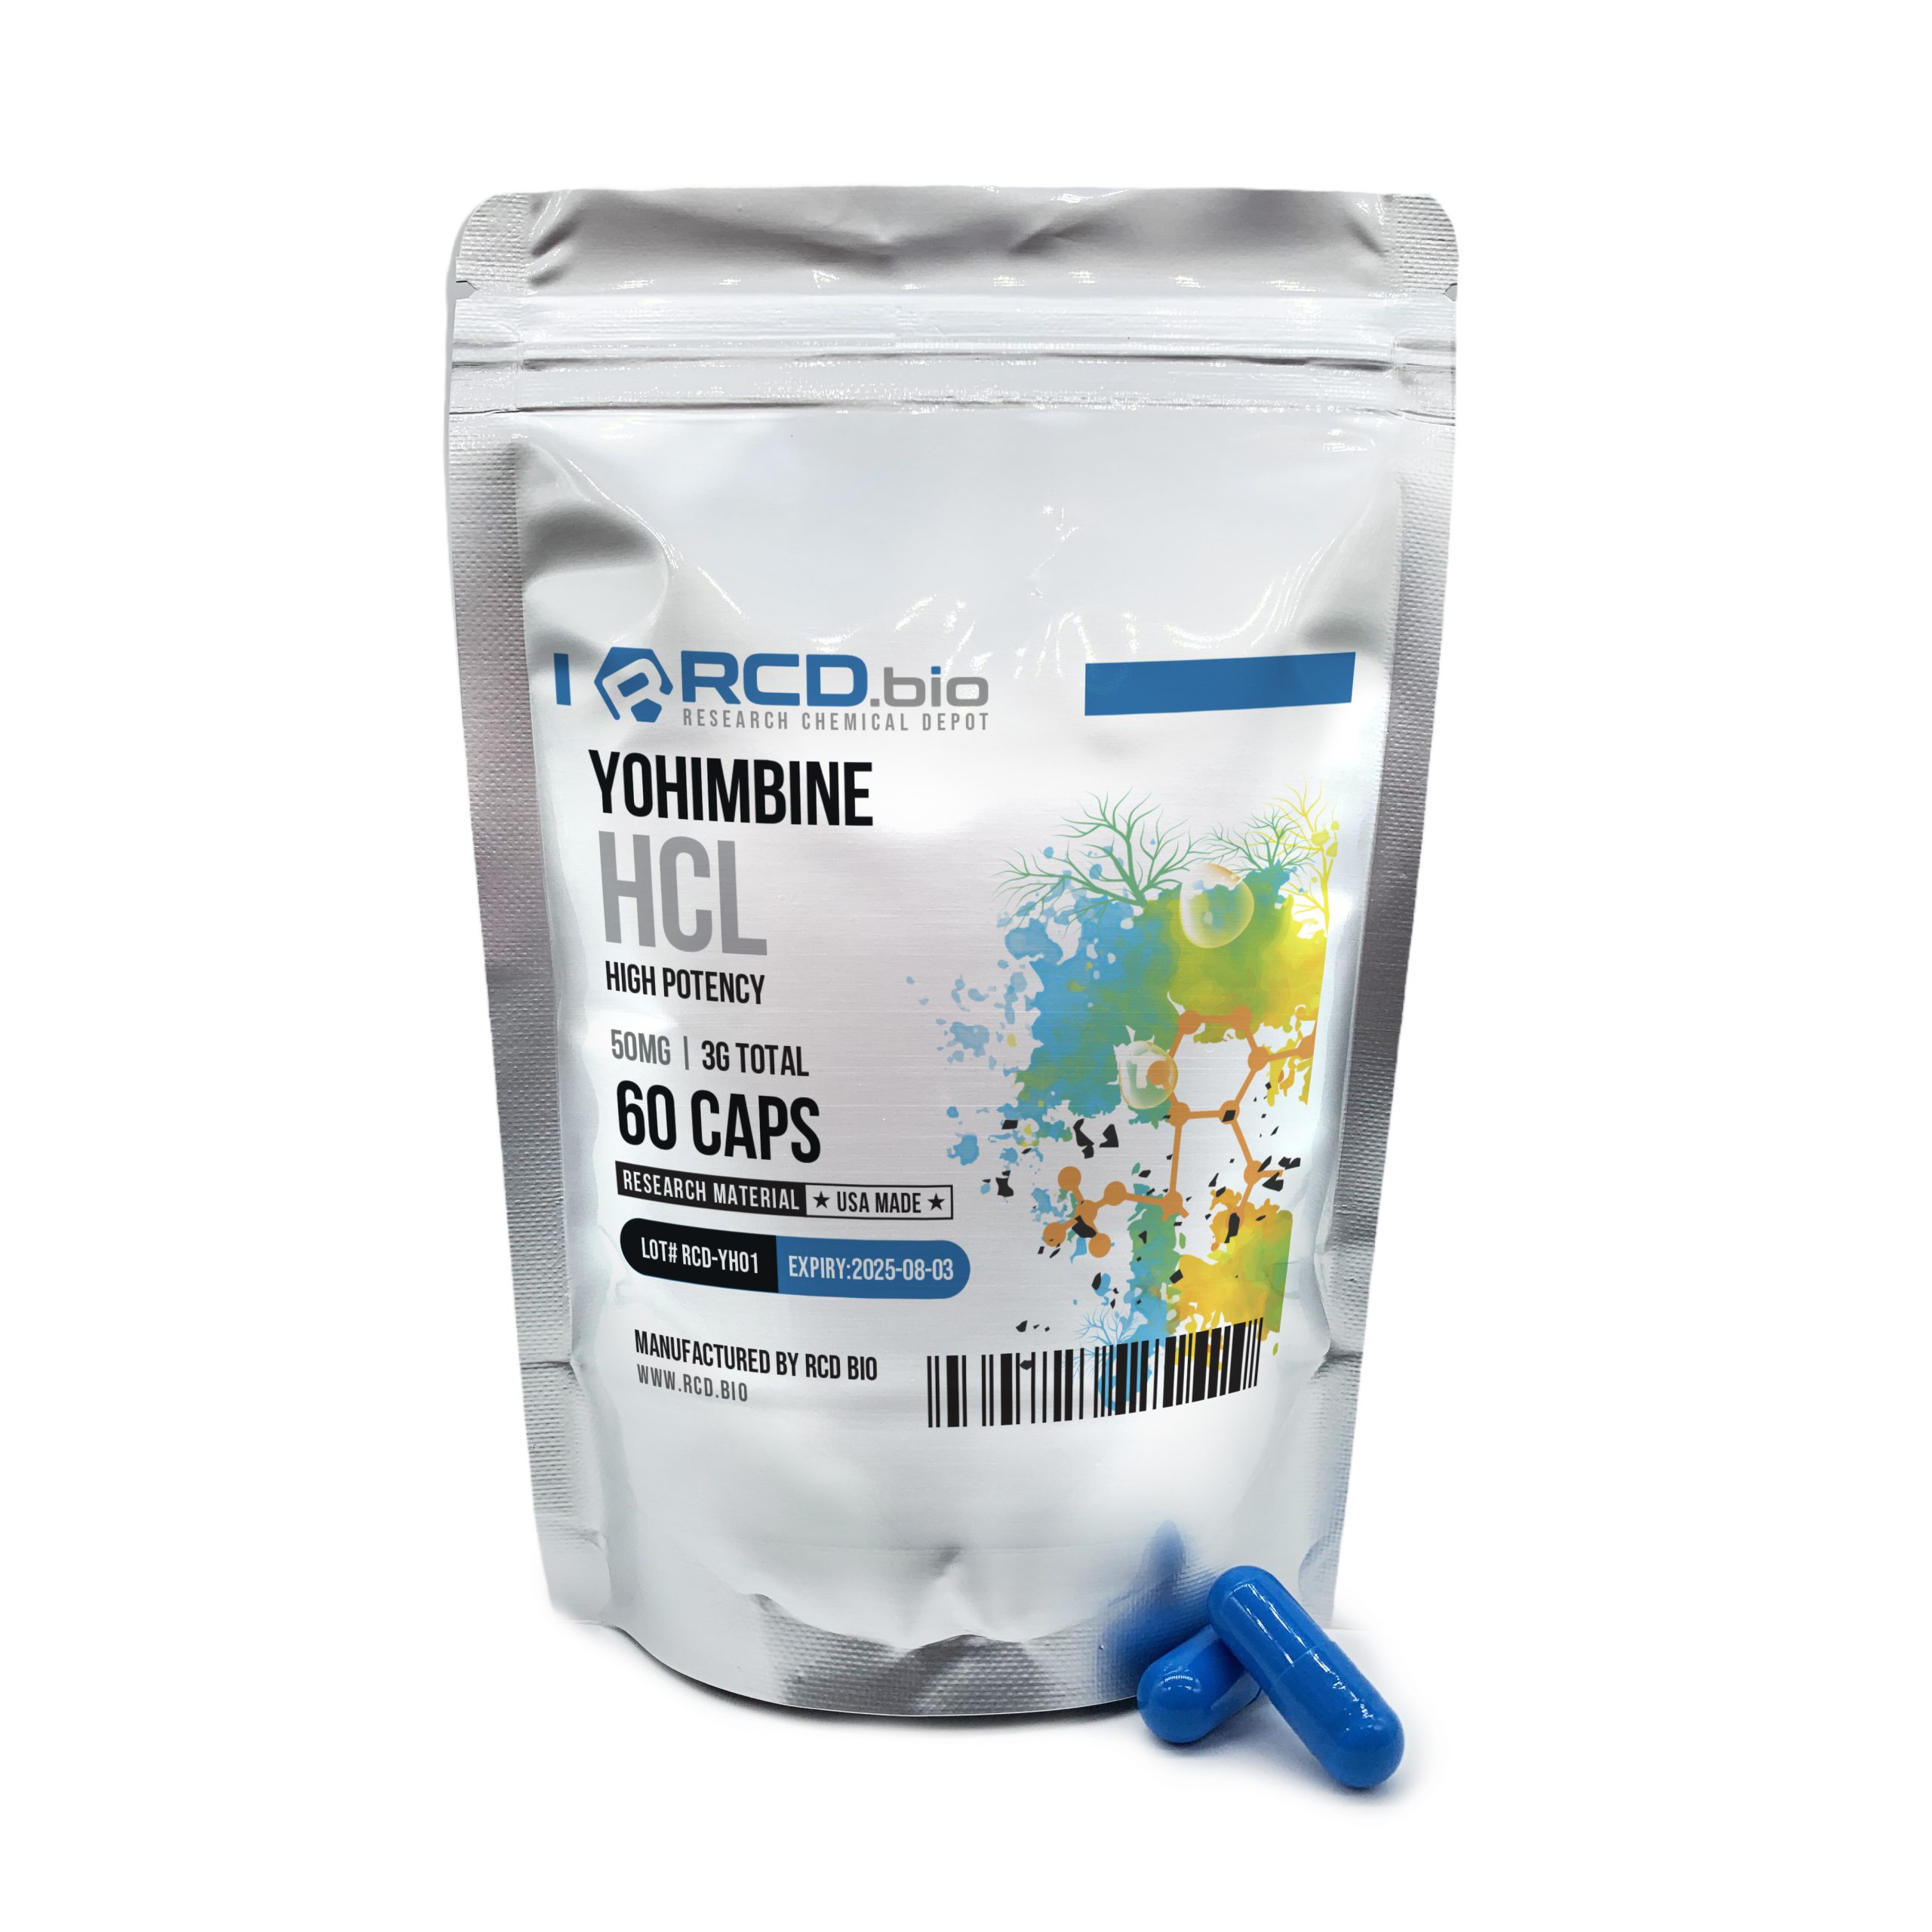 Yohimbine HCL High Potency | RCD.bio